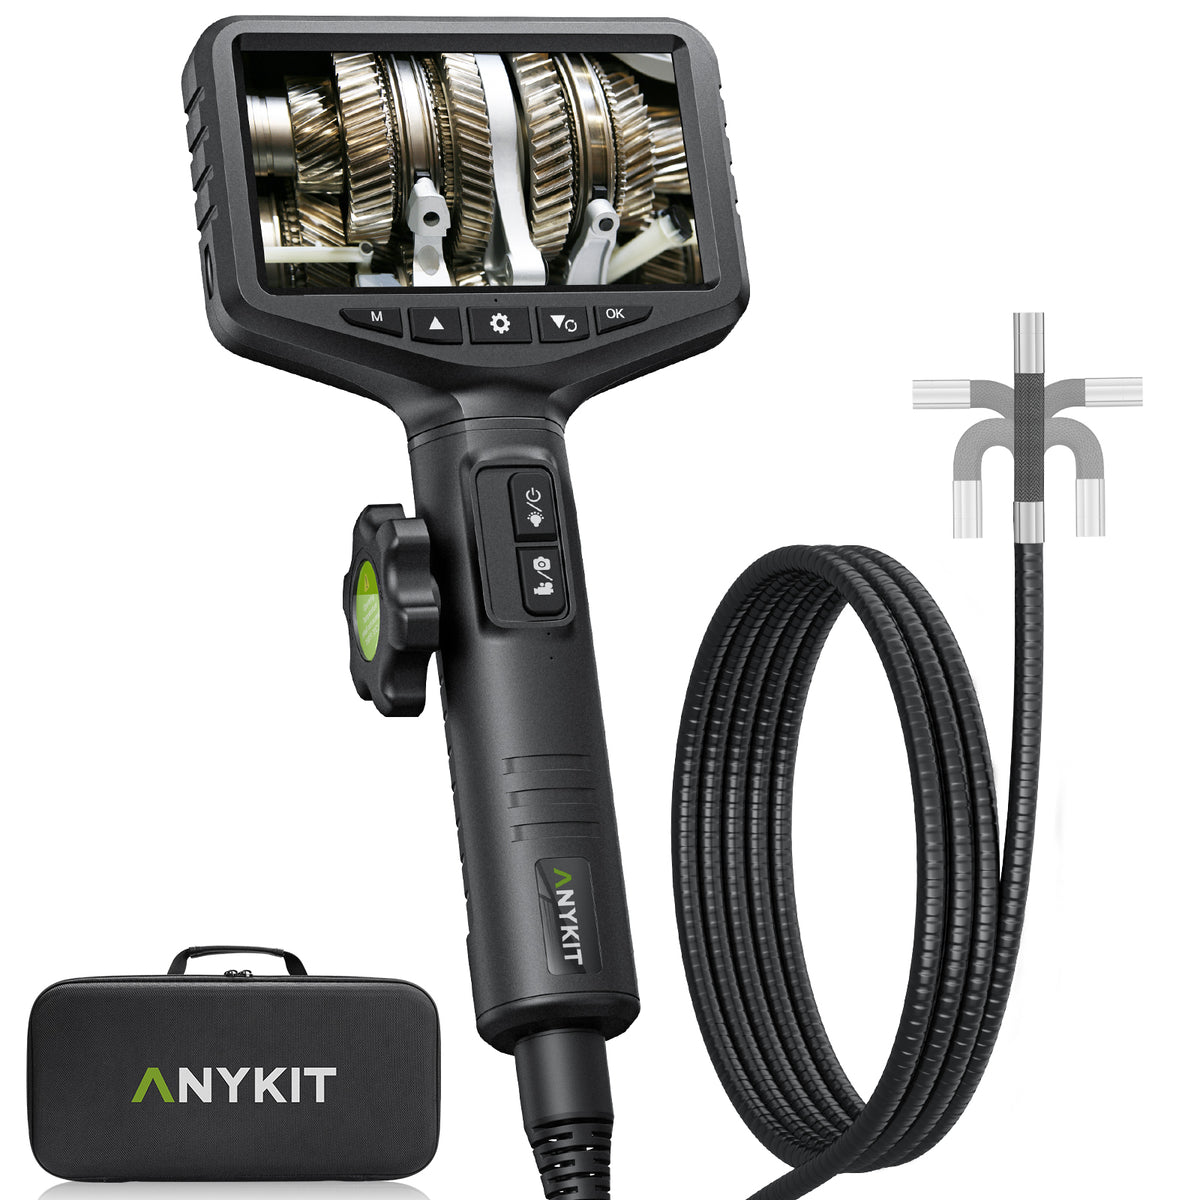 NTE430 USB Digital Otoscope with Camera — Anykit